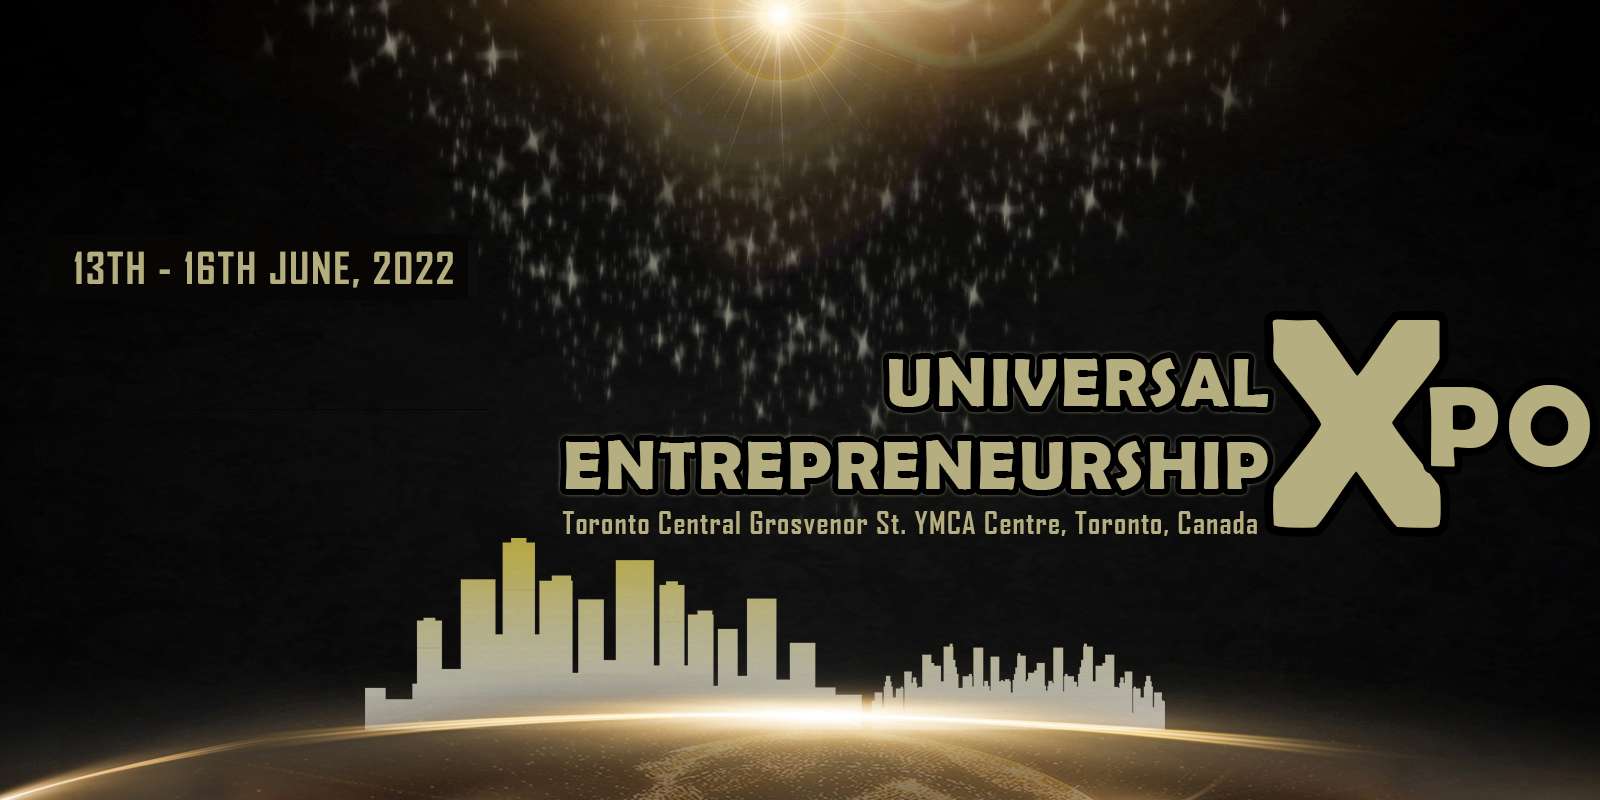 Universal Entrepreneurship Expo 2022